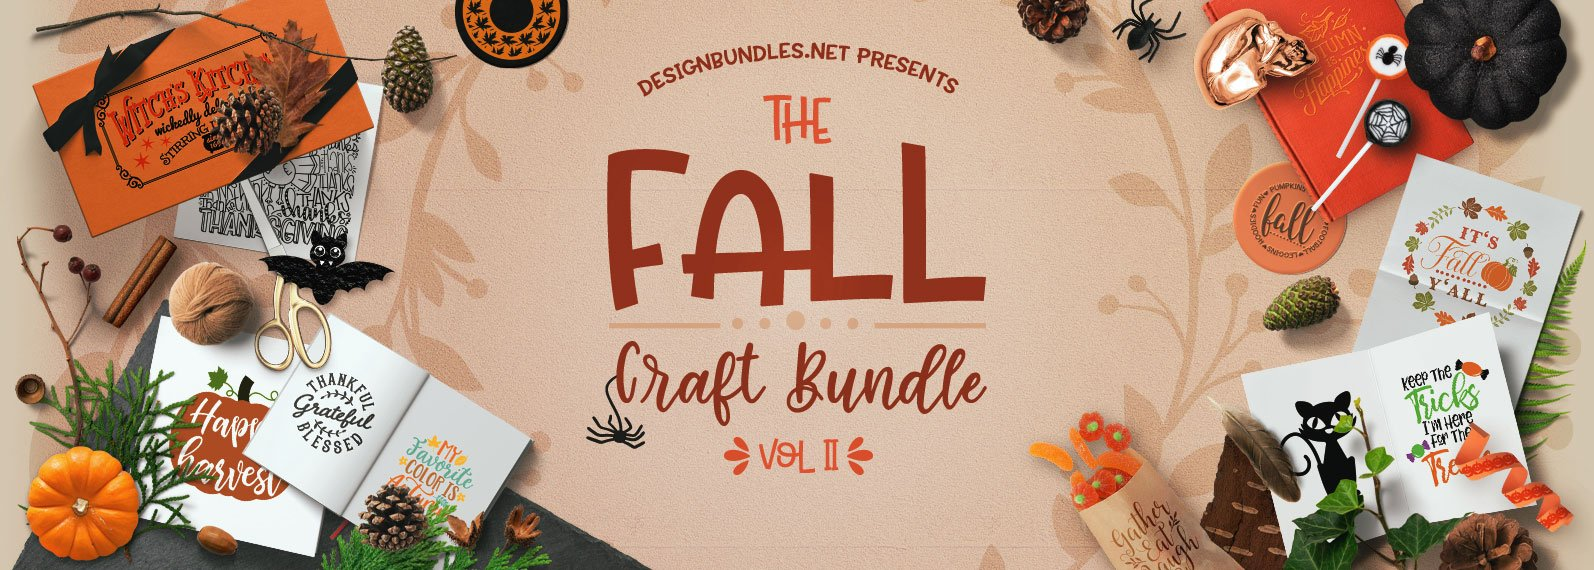 The Fall Craft Bundle Volume II